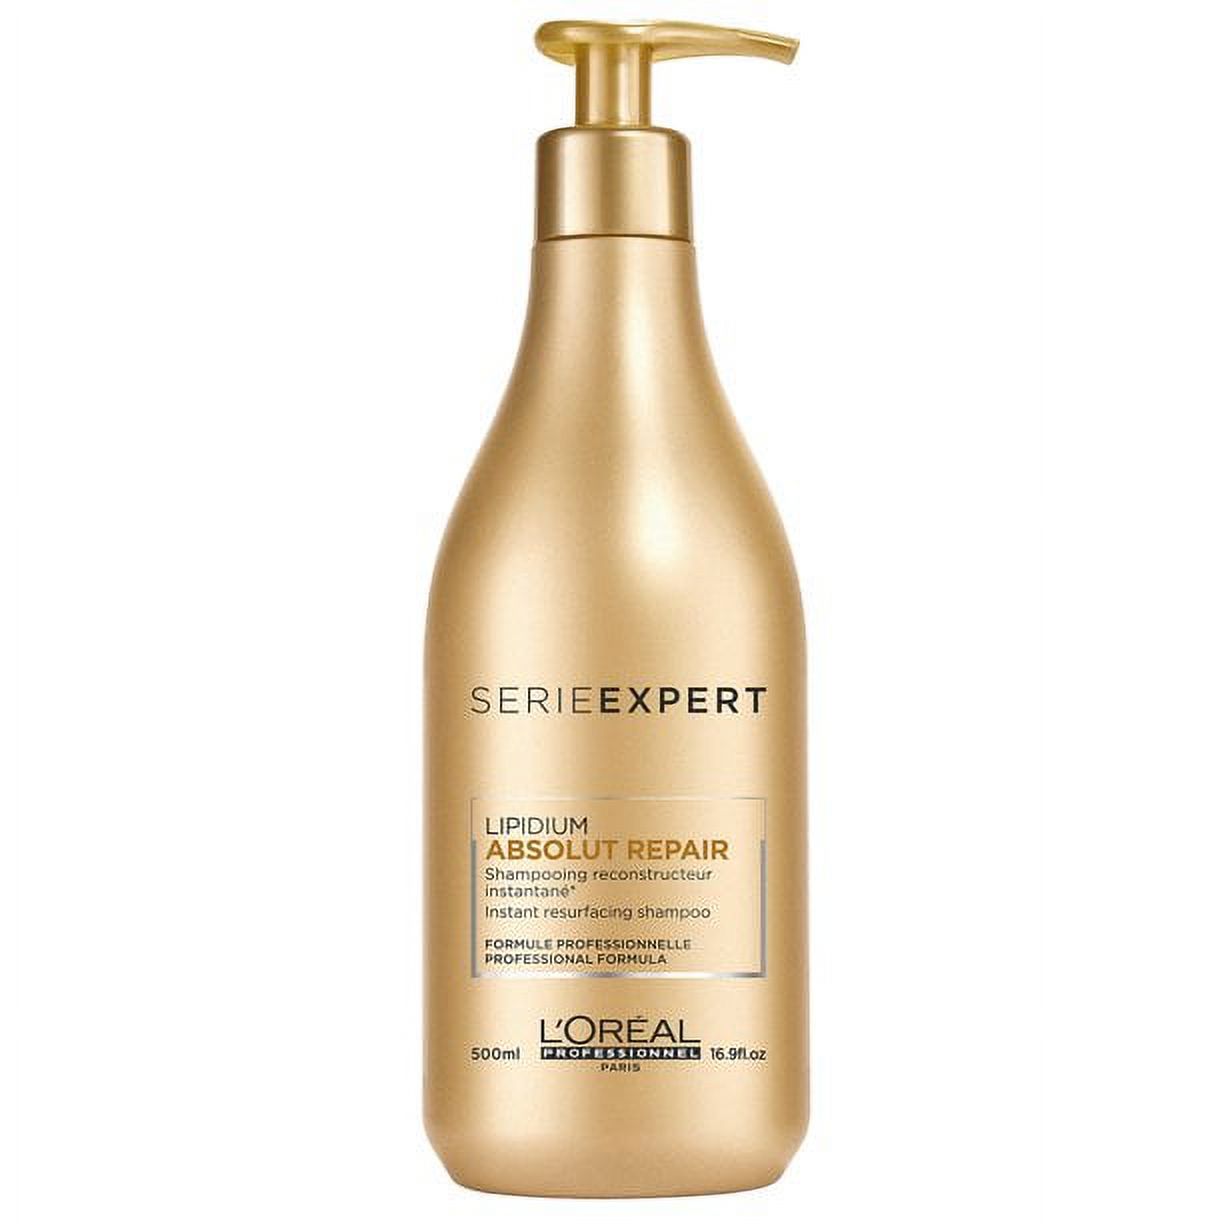 L'Oreal Expert Absolut Repair Shampoo | Protein Hair Treatment | Shampoo for Dry Hair with Quinoa and Proteins | Shampoo for Color Treated Hair | Salon Shampoo for Damaged Hair | 16.9 Fl. Oz - image 1 of 1